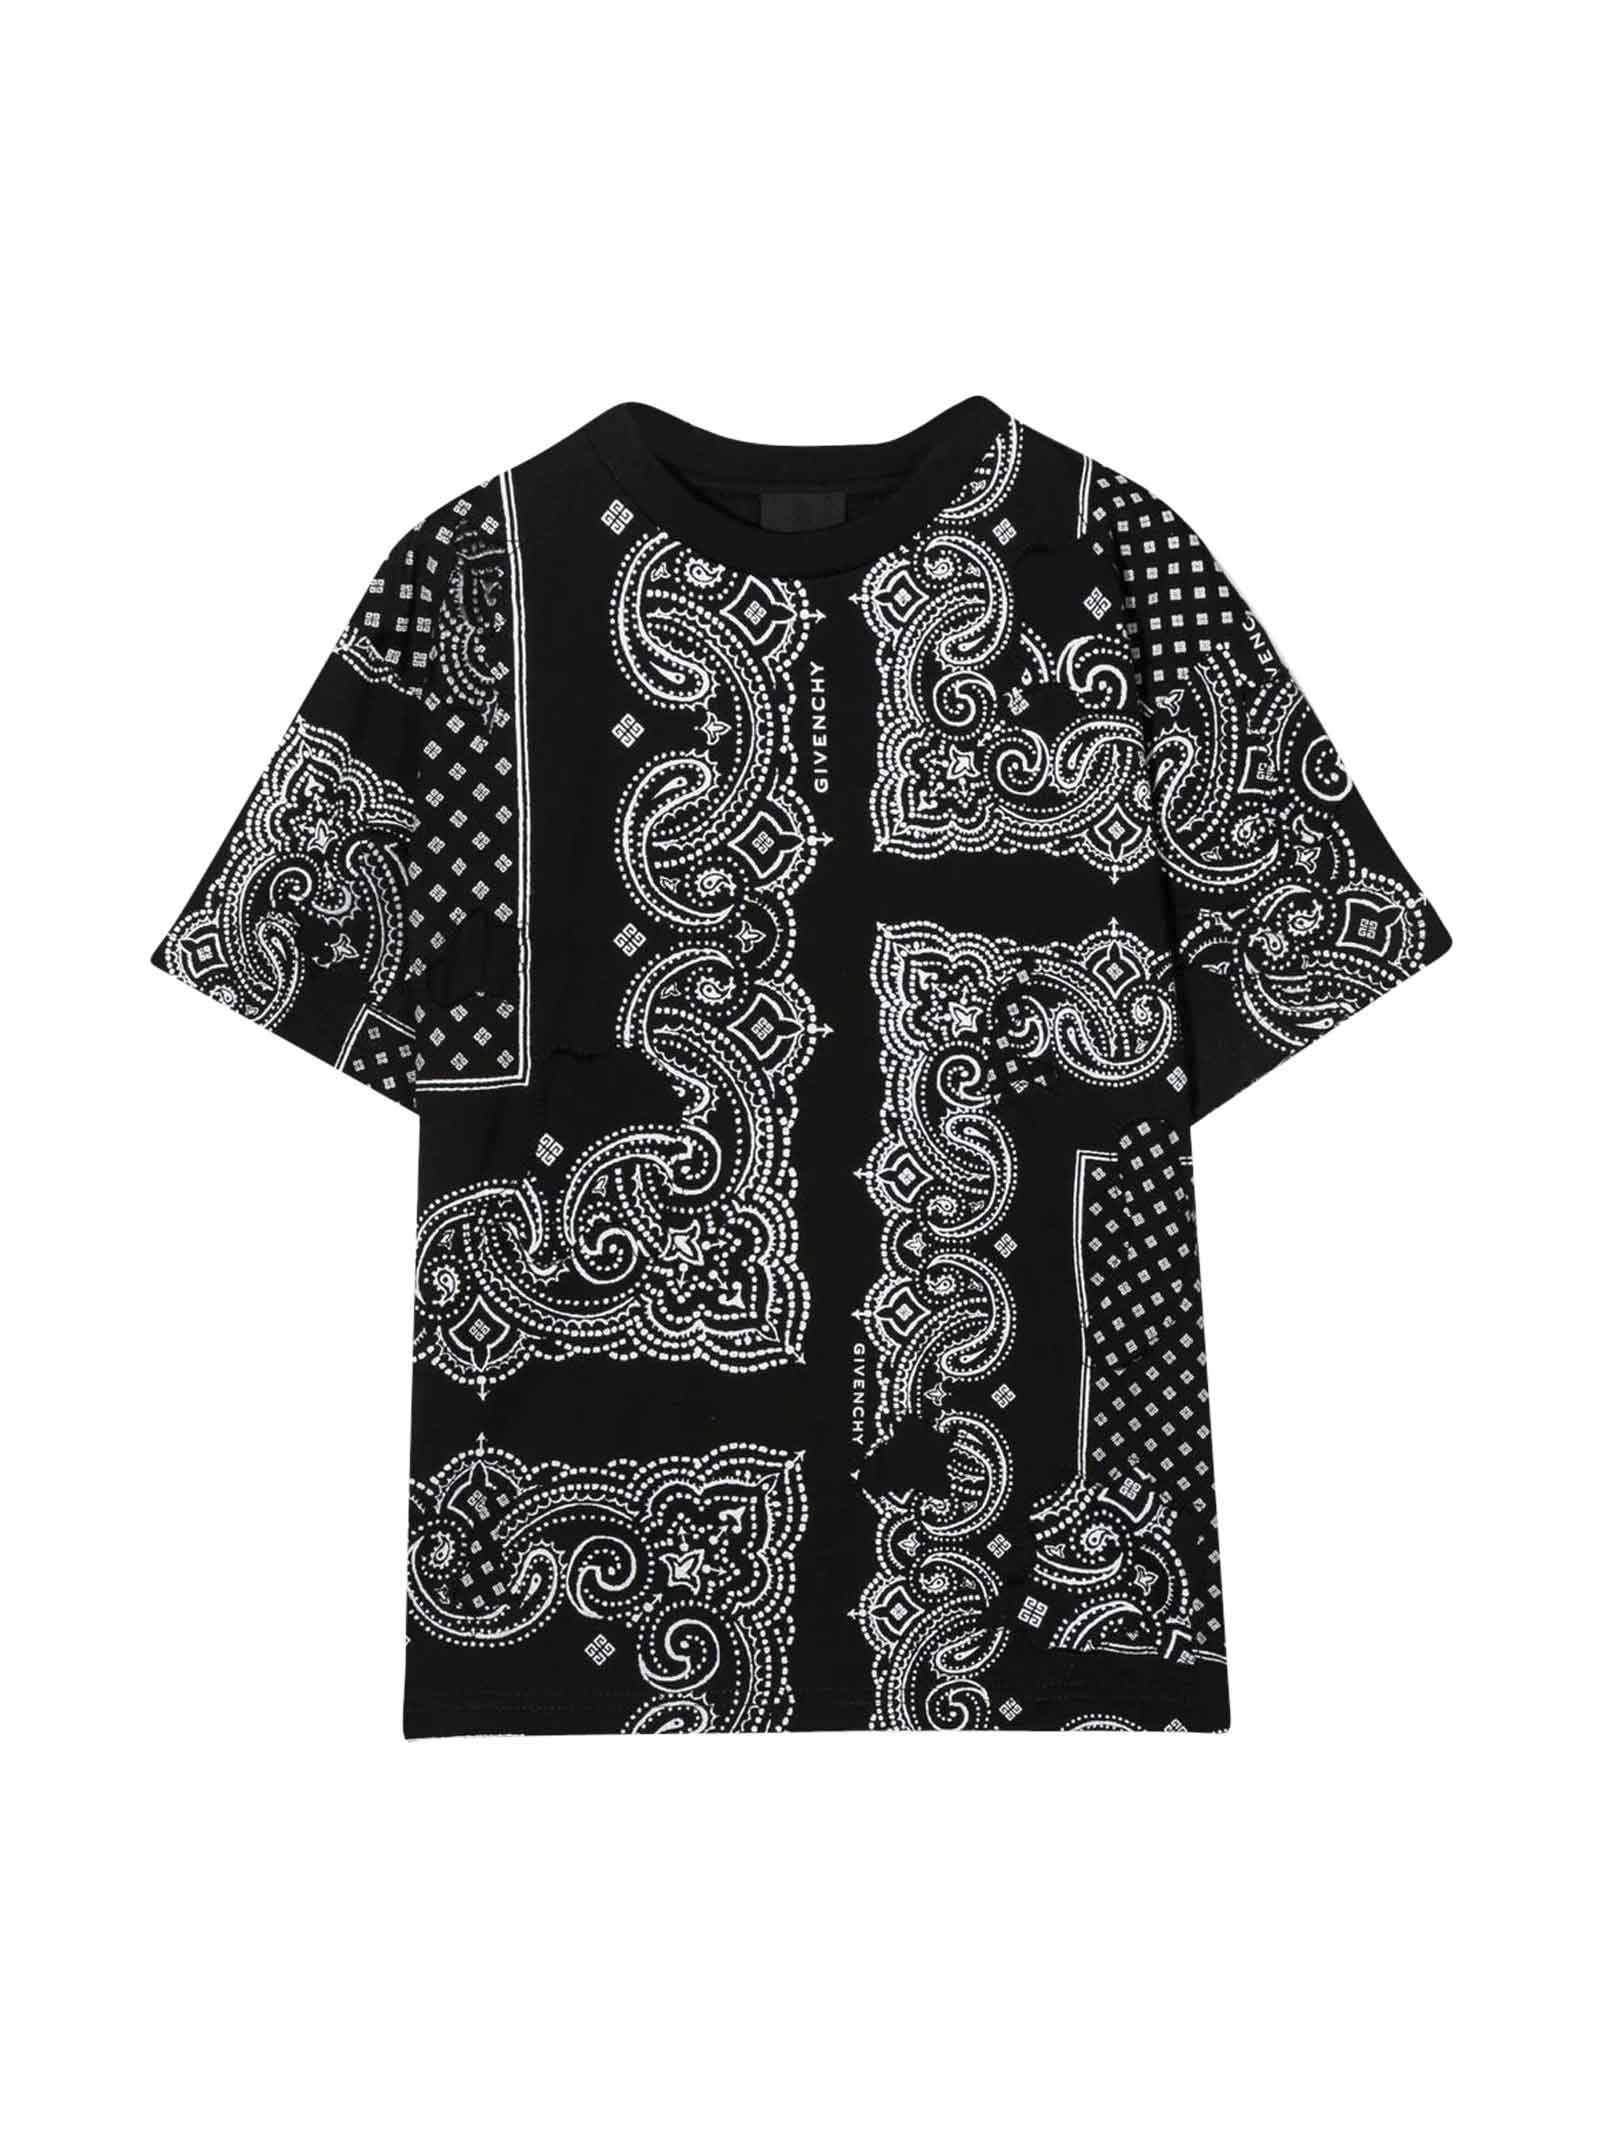 Givenchy Boy T-shirt With Bandana Print